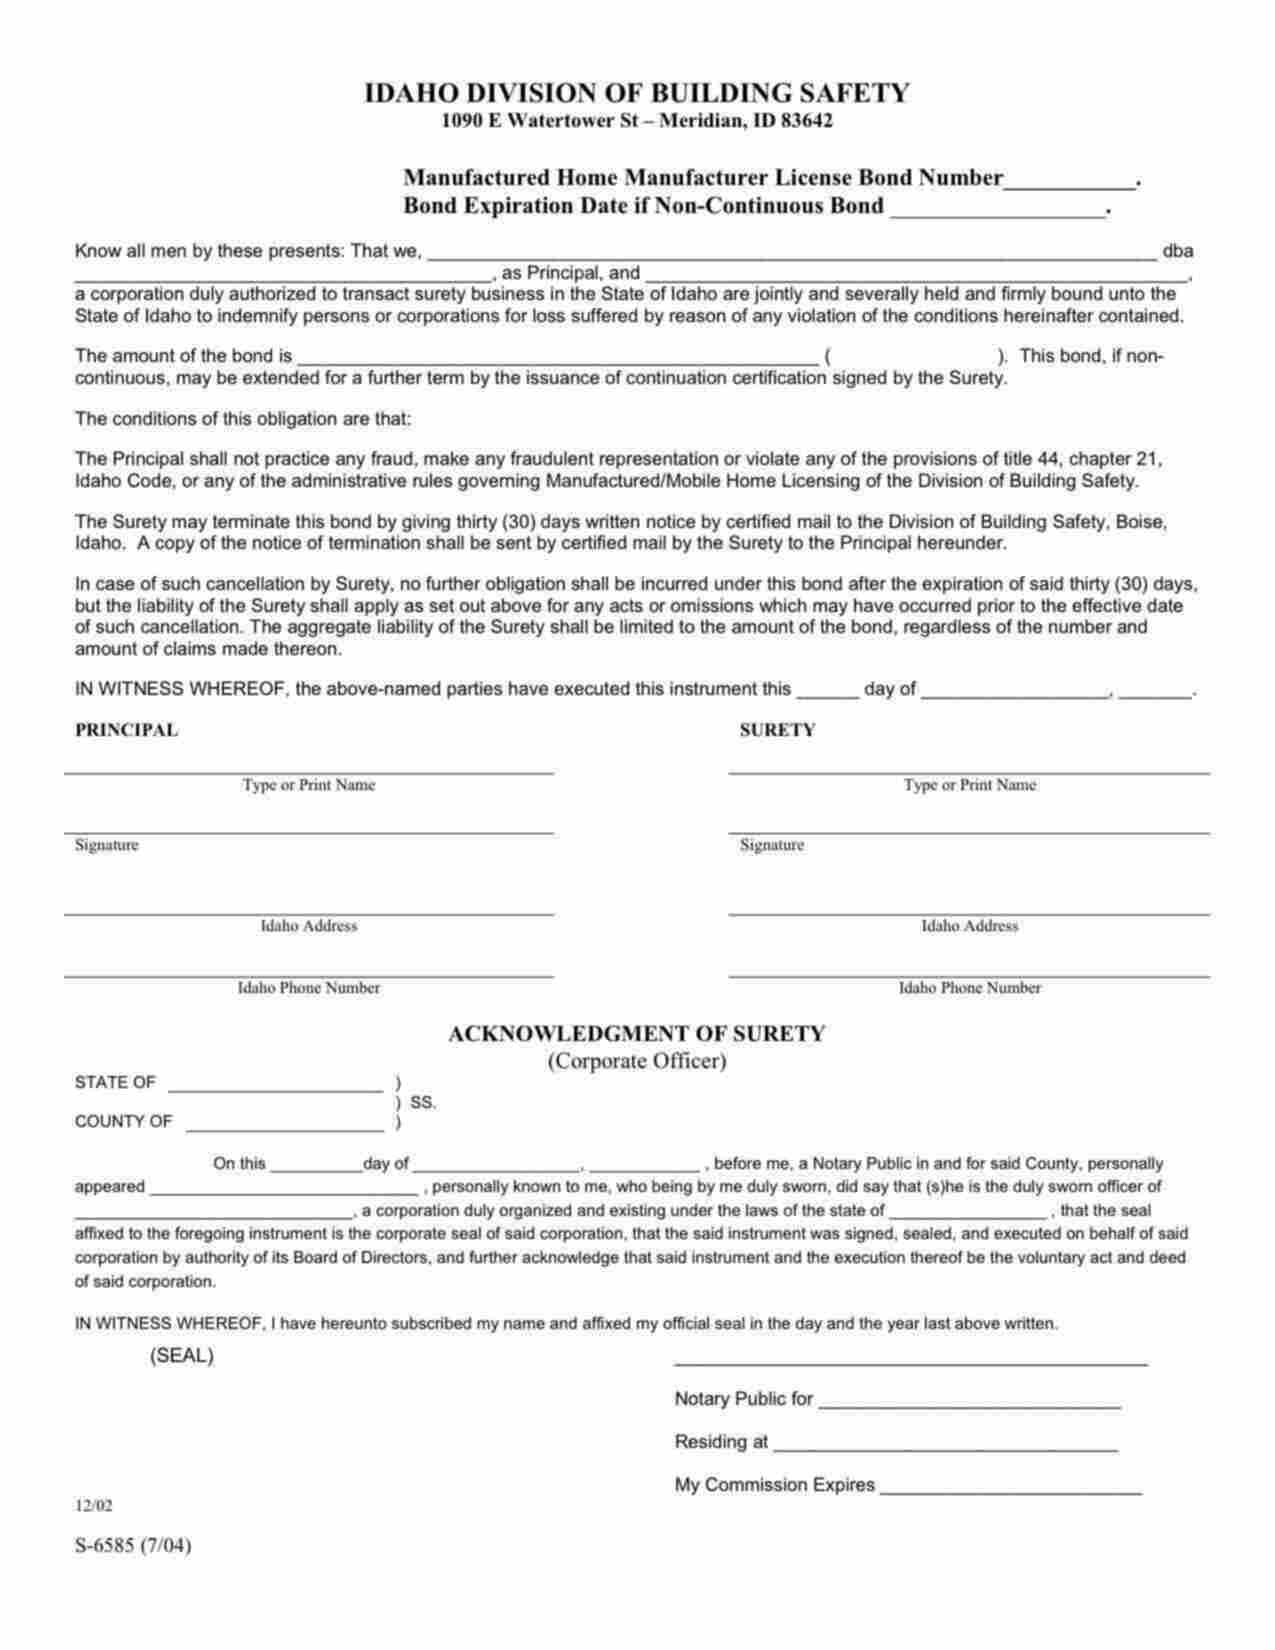 Idaho Manufactured Home Manufacturer License Bond Form